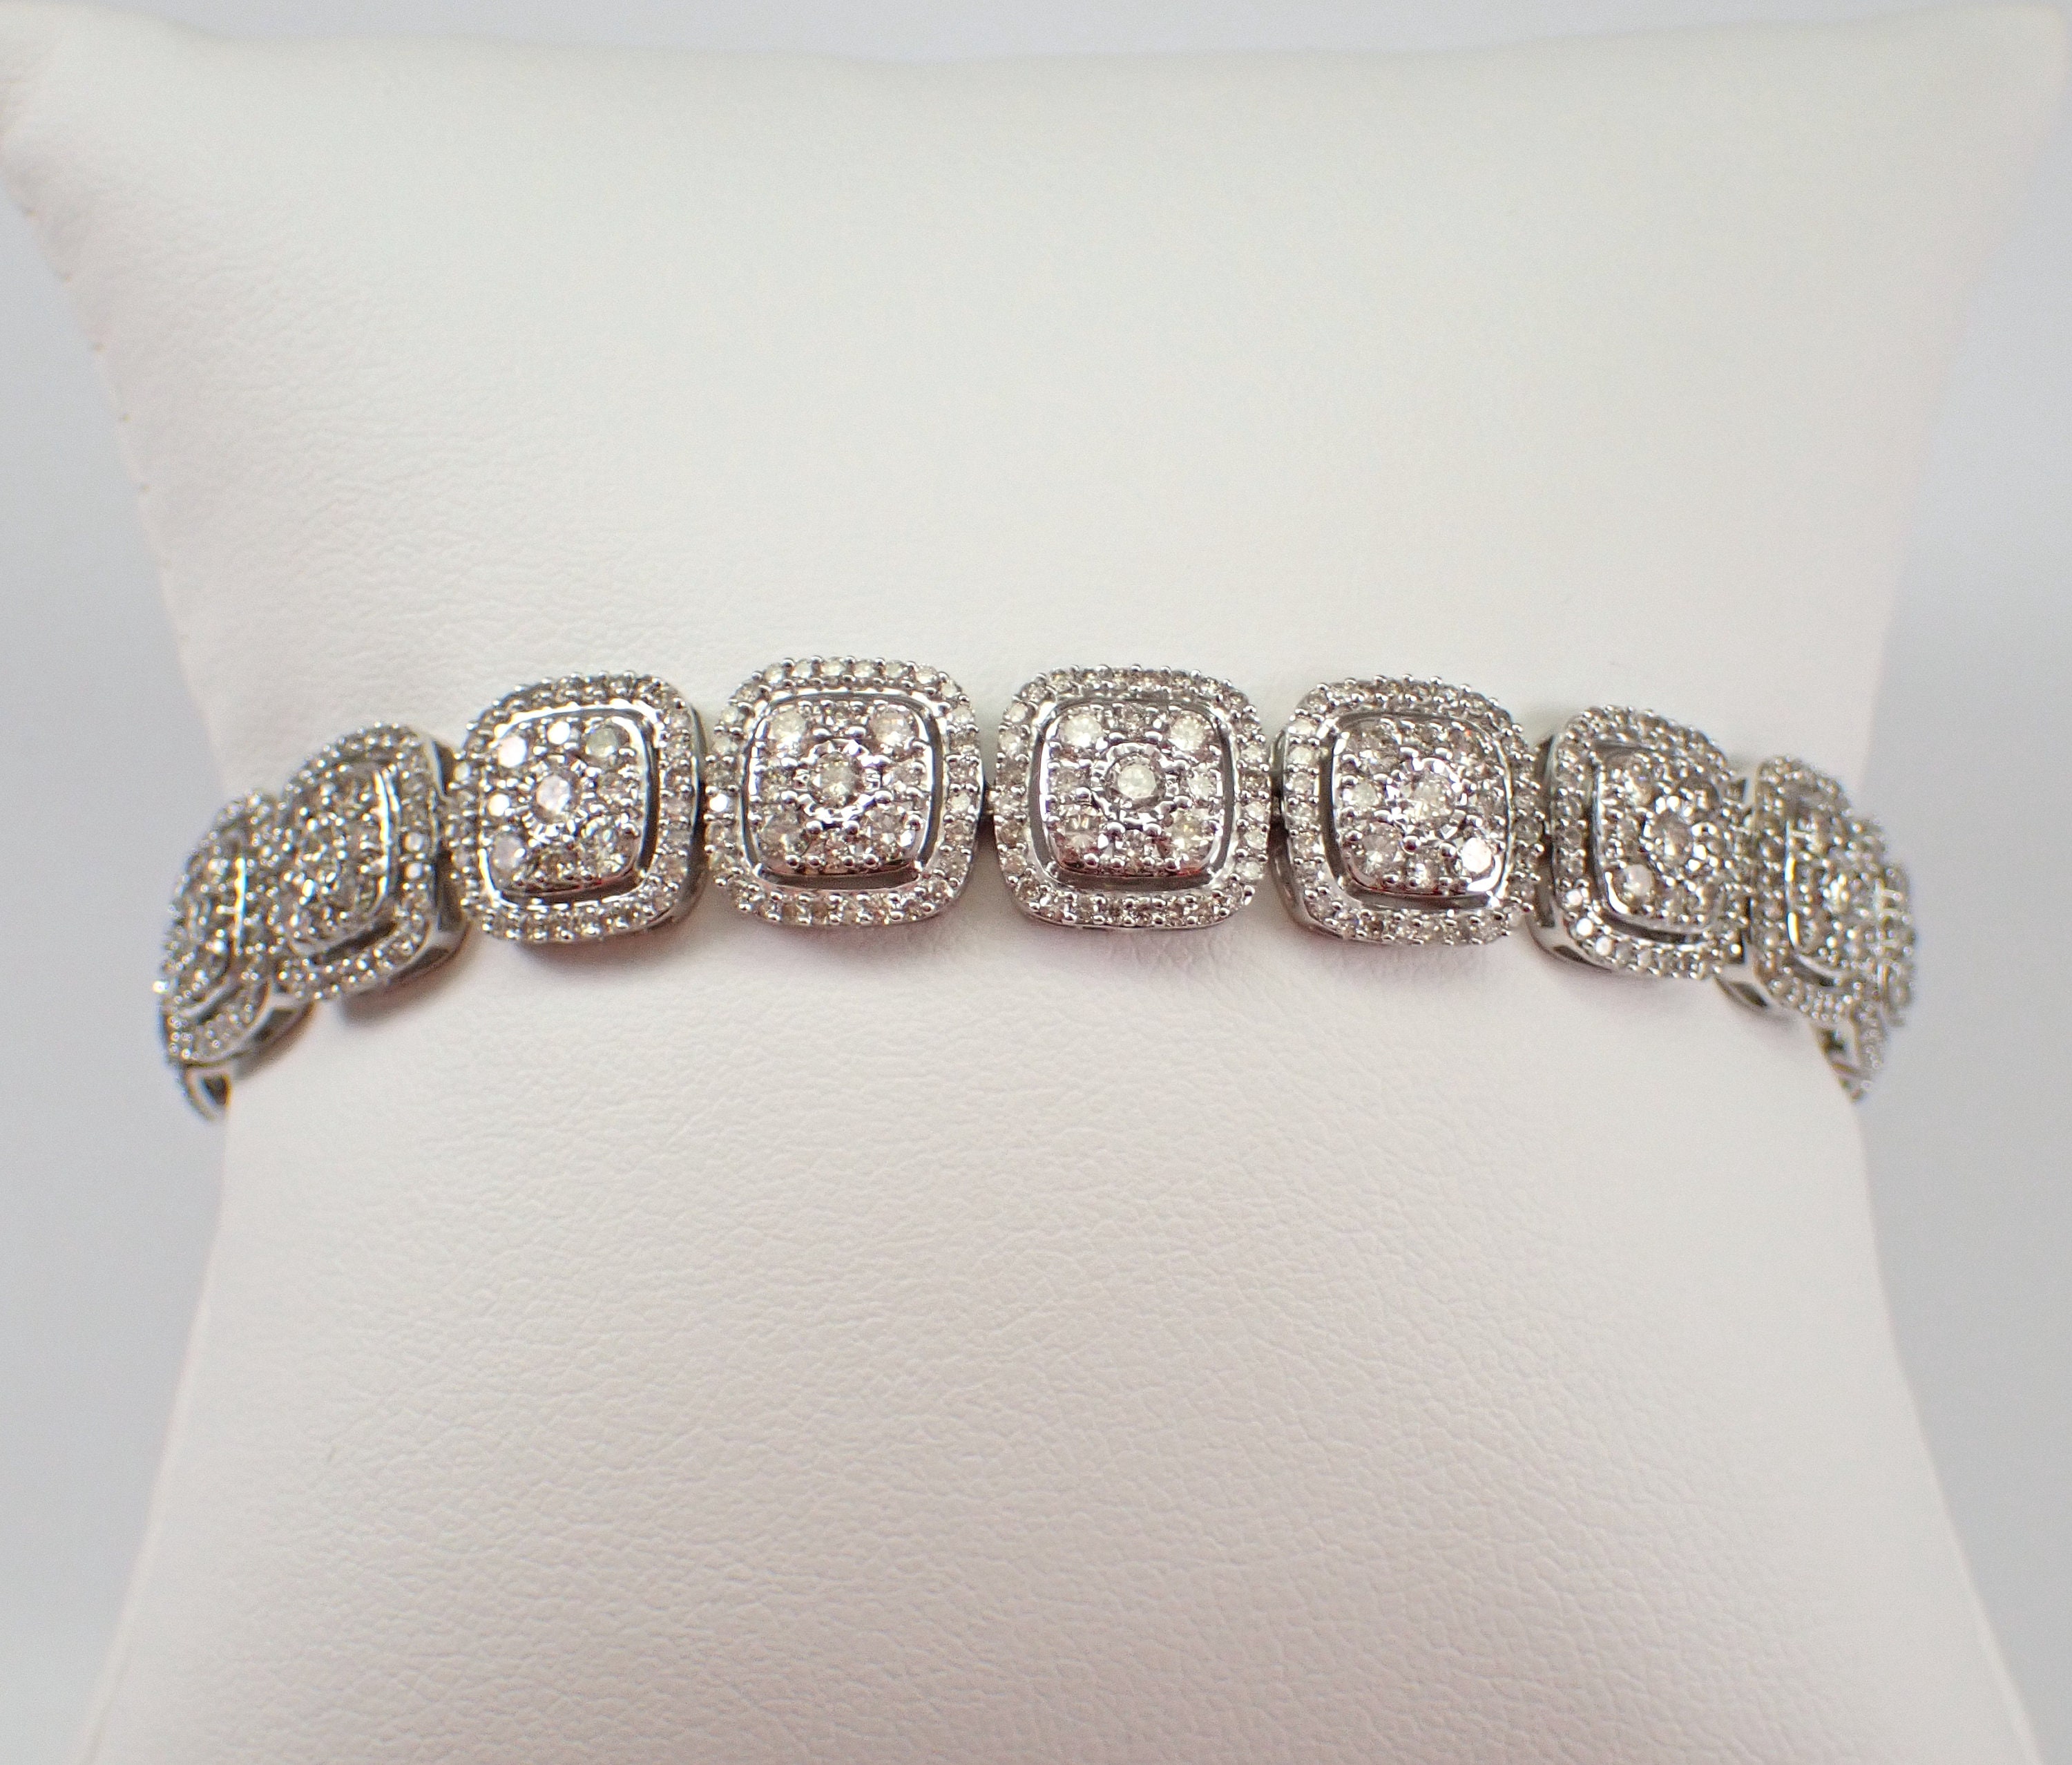 7 Carat Round Cut Diamond Tennis Bracelet | I.D. Jewelry